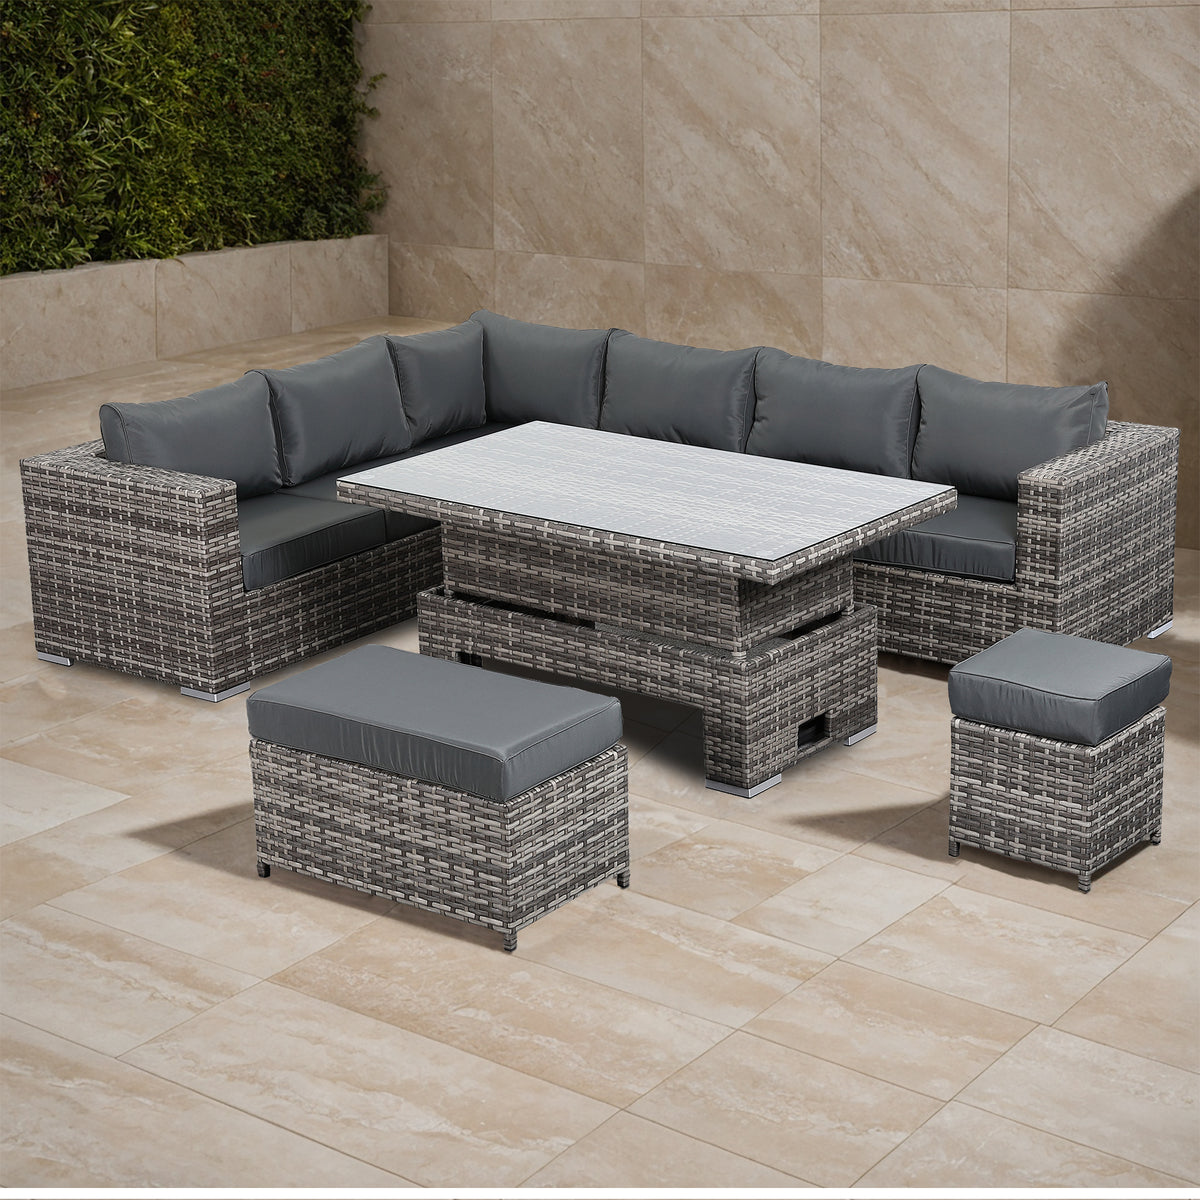 Rattan Park Colette Range Aluminium  Frame  Modular Corner Sofa with Rising Table in Medium Grey Weave